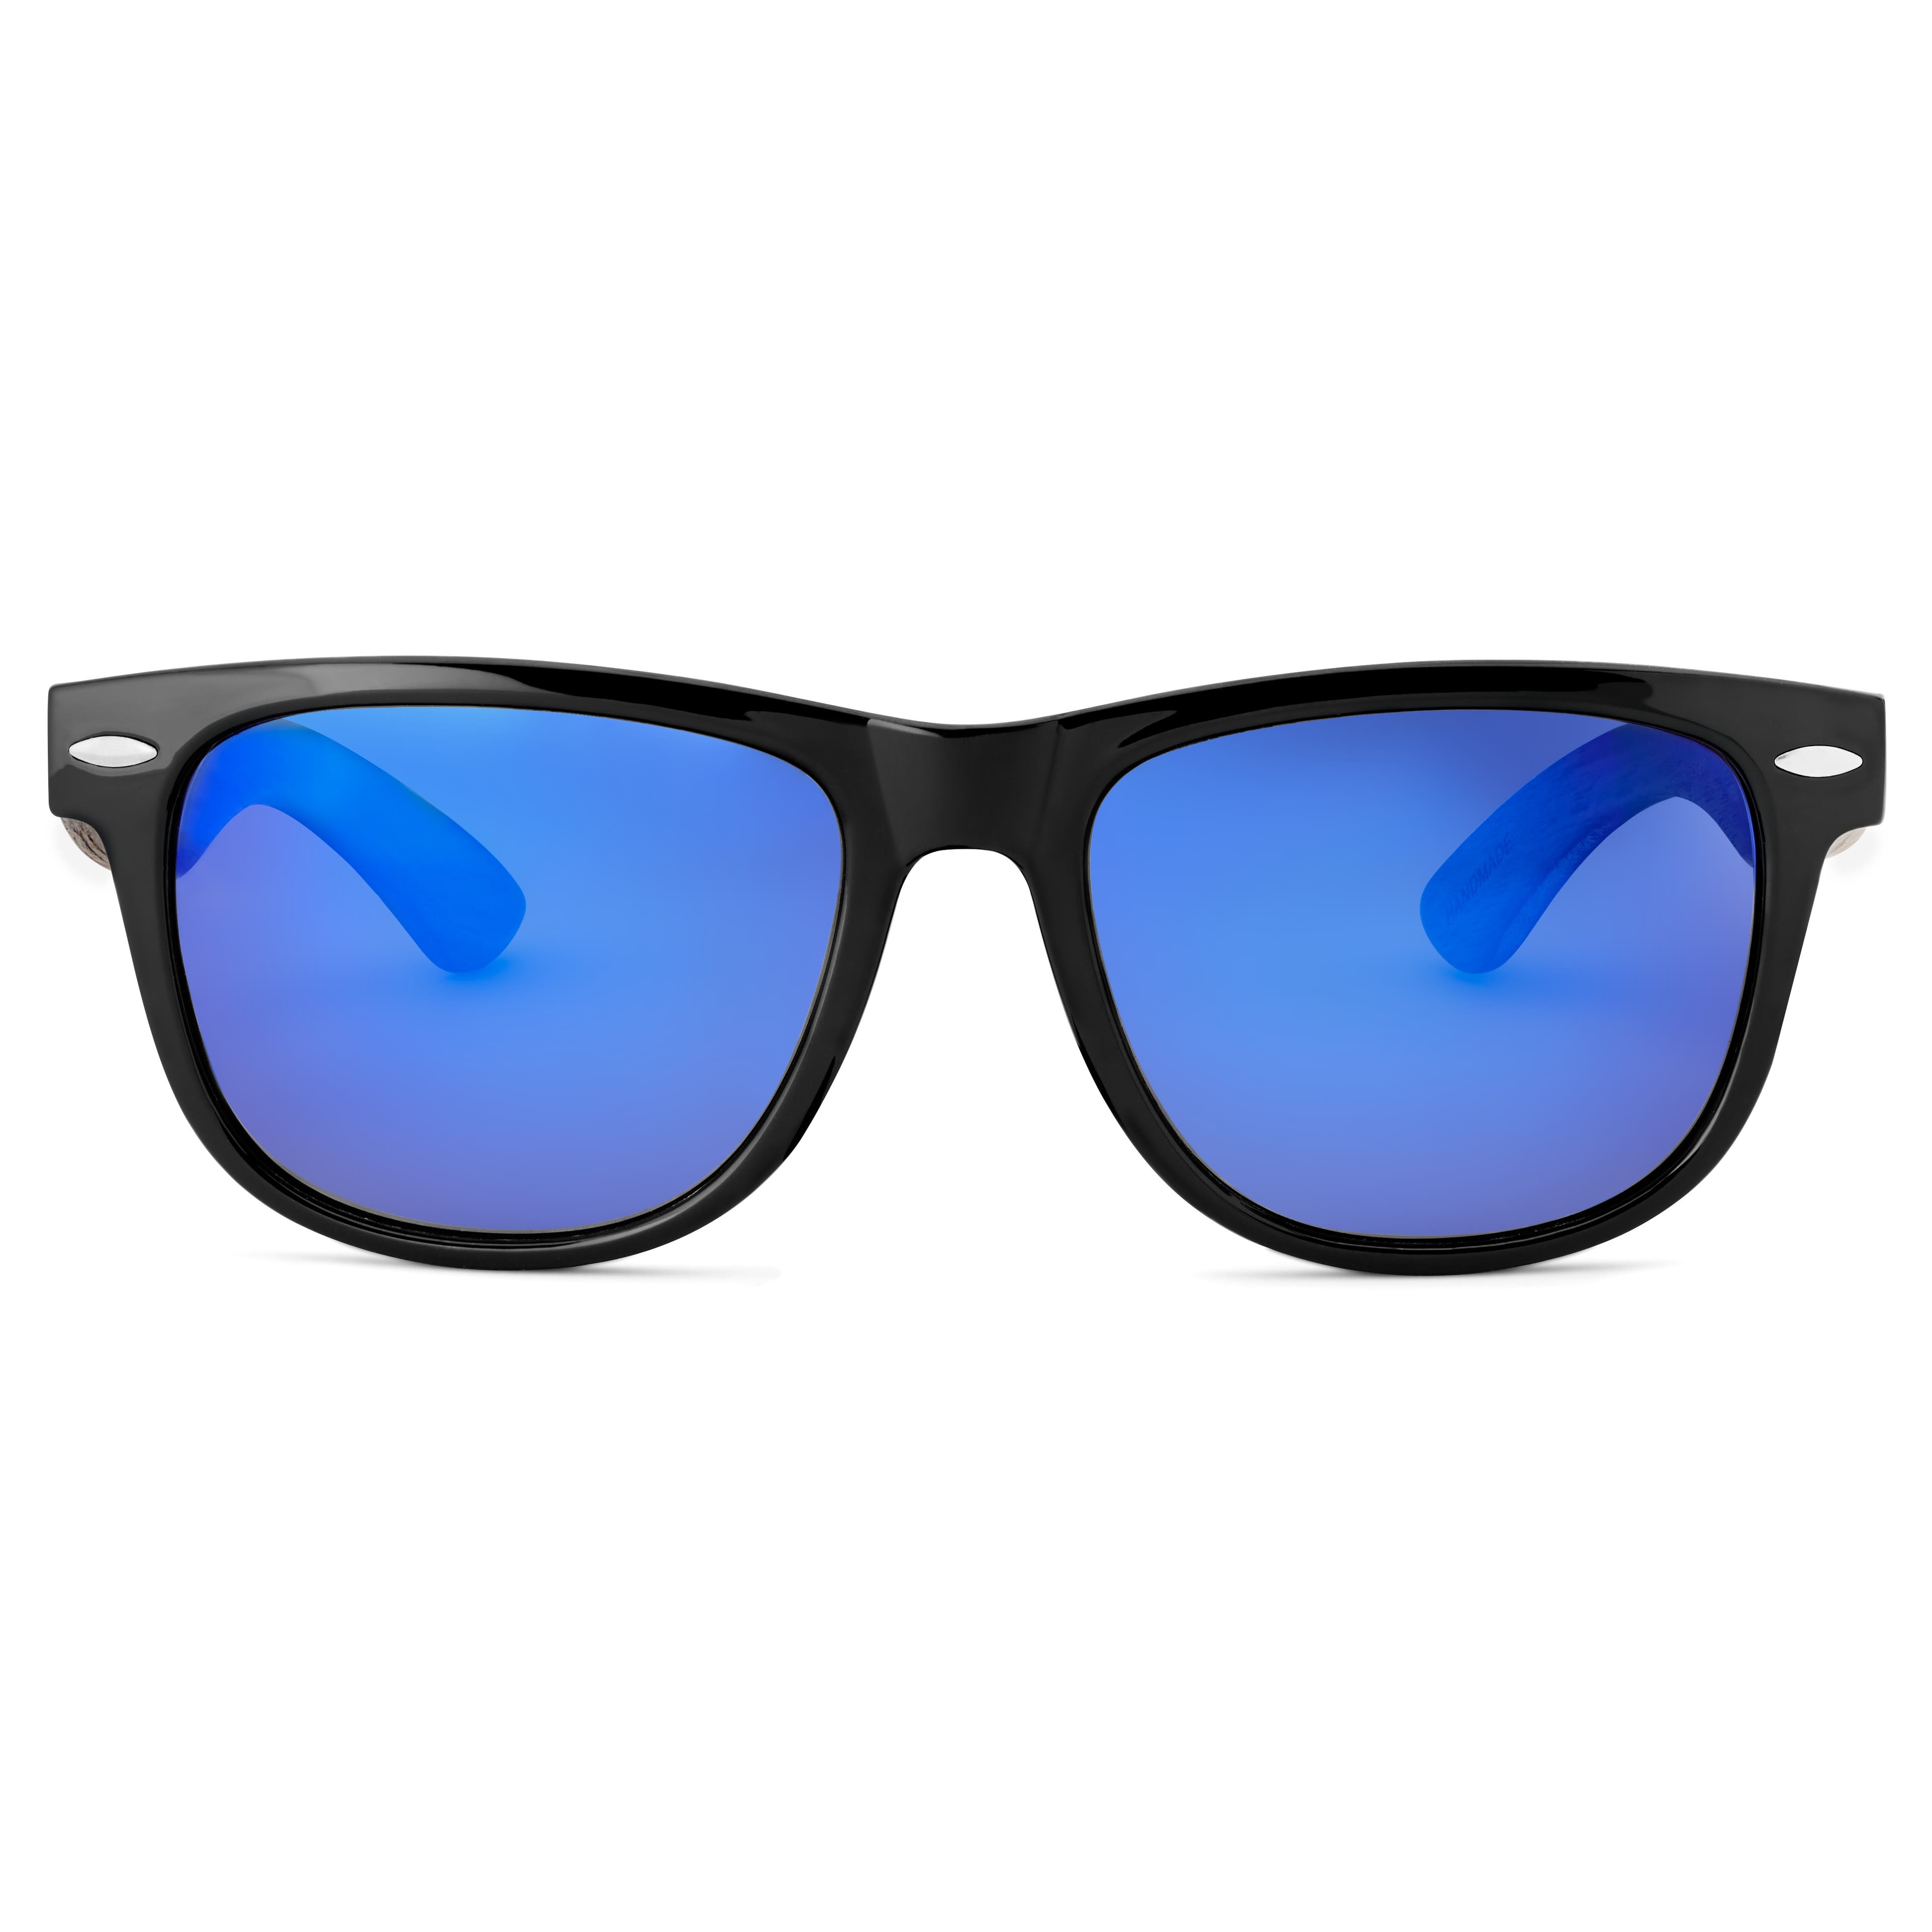 Black & Blue Retro Polarised Sunglasses With Wood Temples